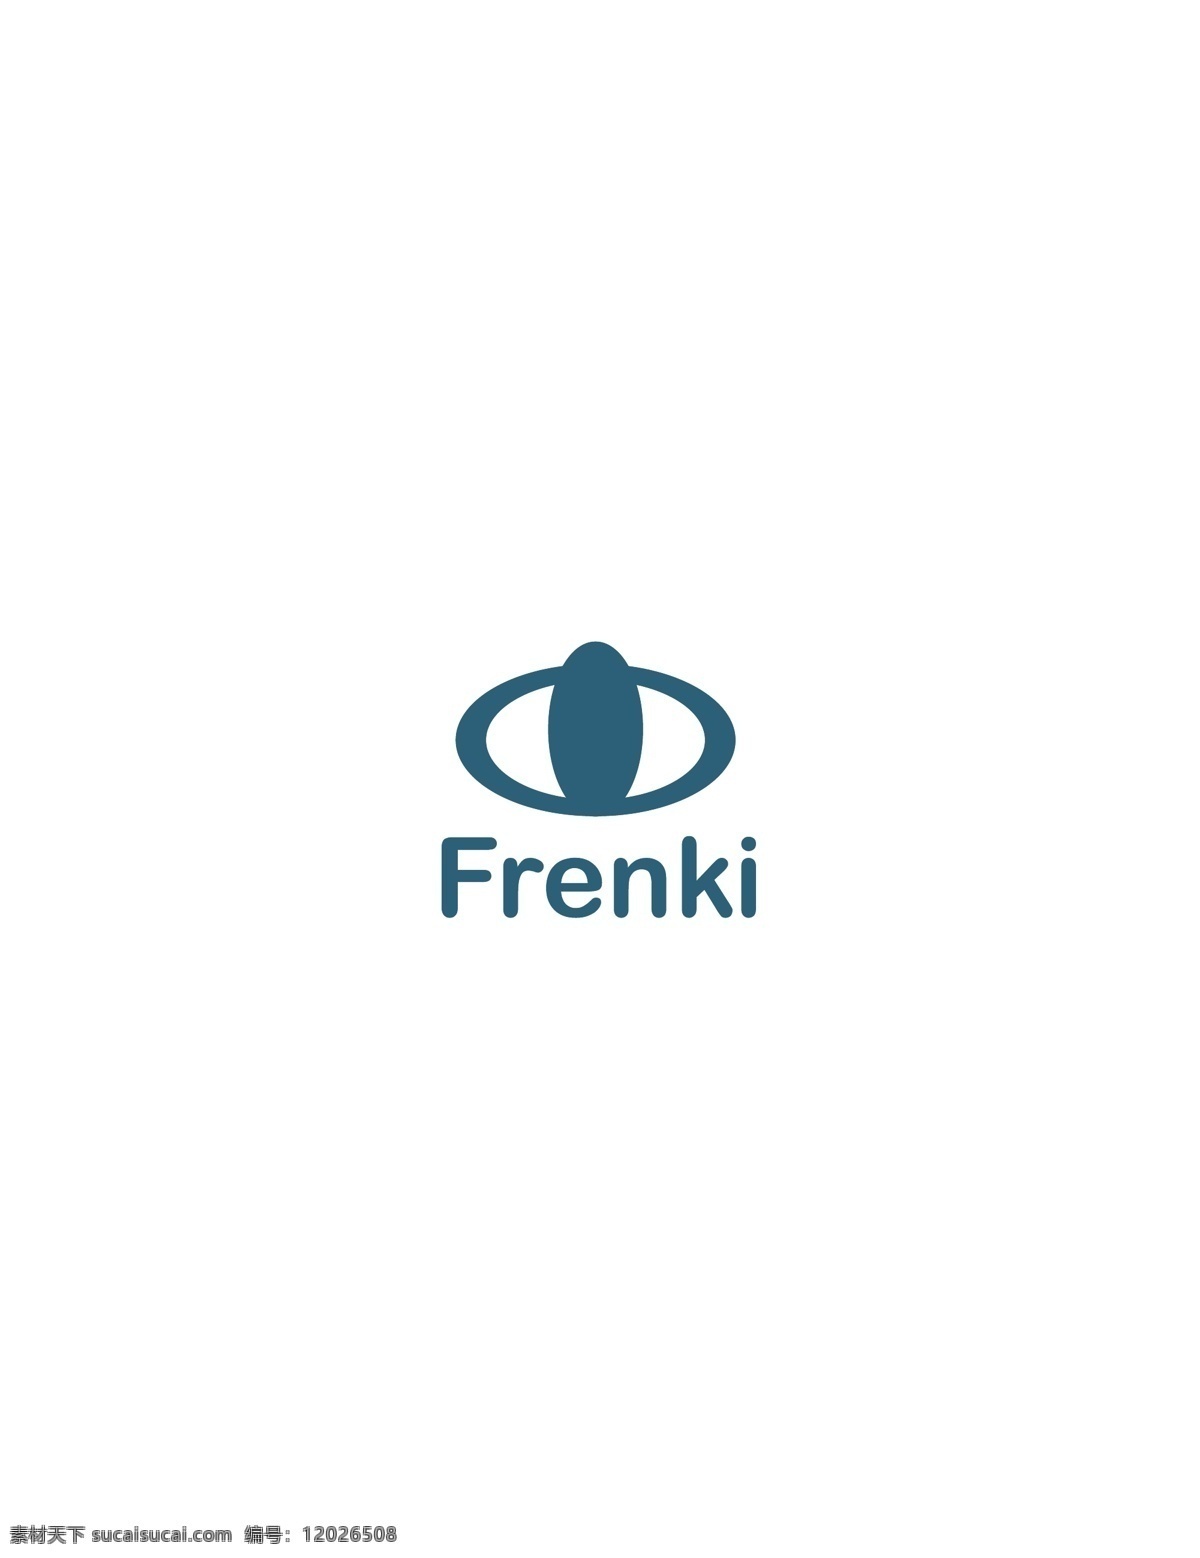 frenki logo大全 logo 设计欣赏 商业矢量 矢量下载 名牌 饮料 标志 标志设计 欣赏 网页矢量 矢量图 其他矢量图